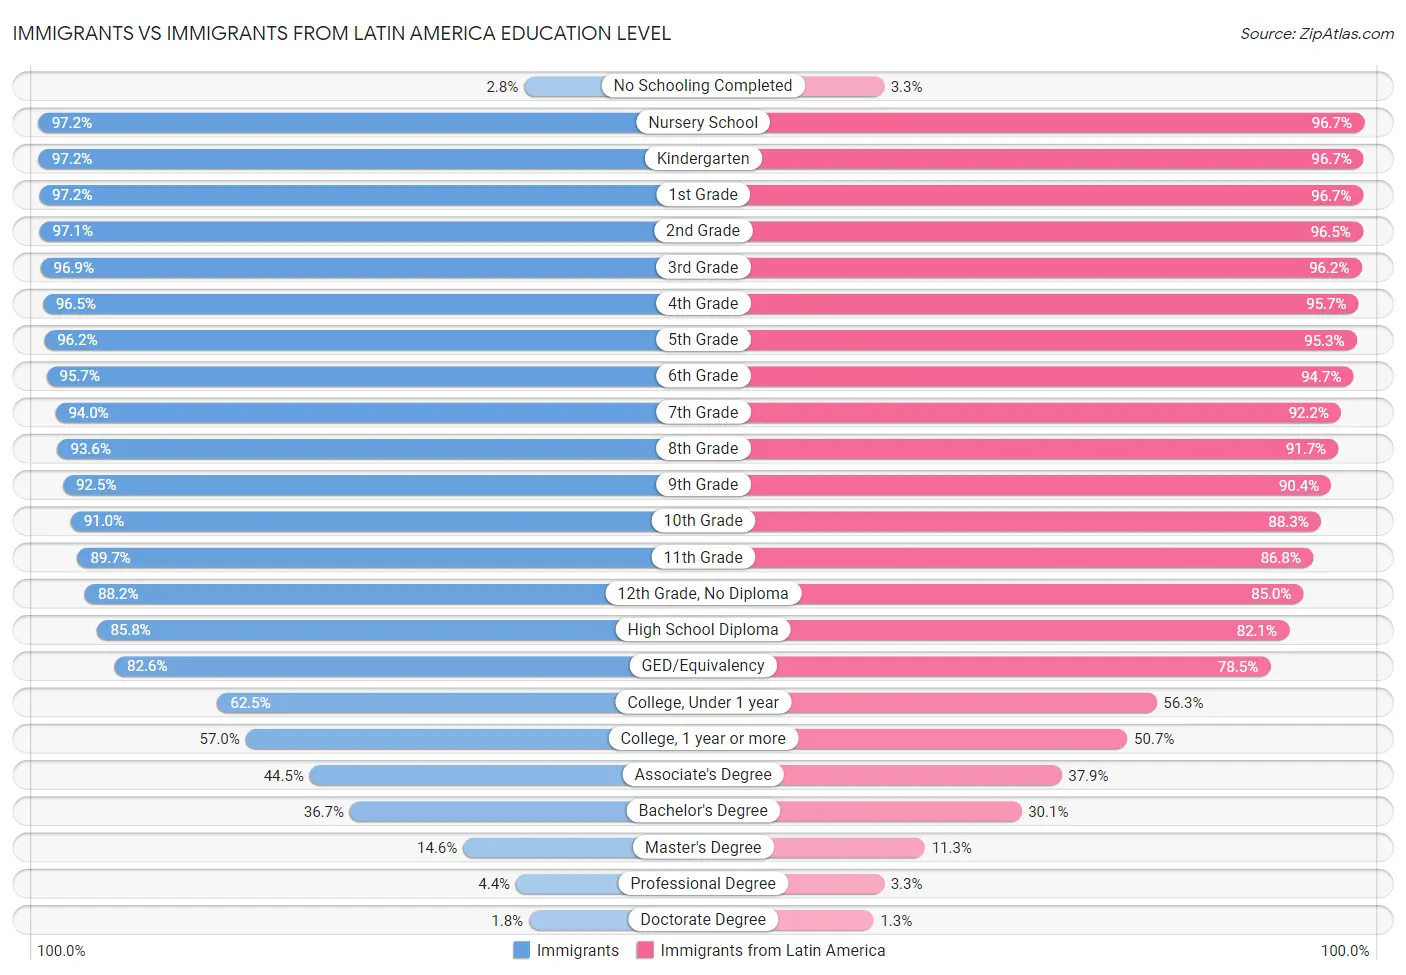 Immigrants vs Immigrants from Latin America Education Level